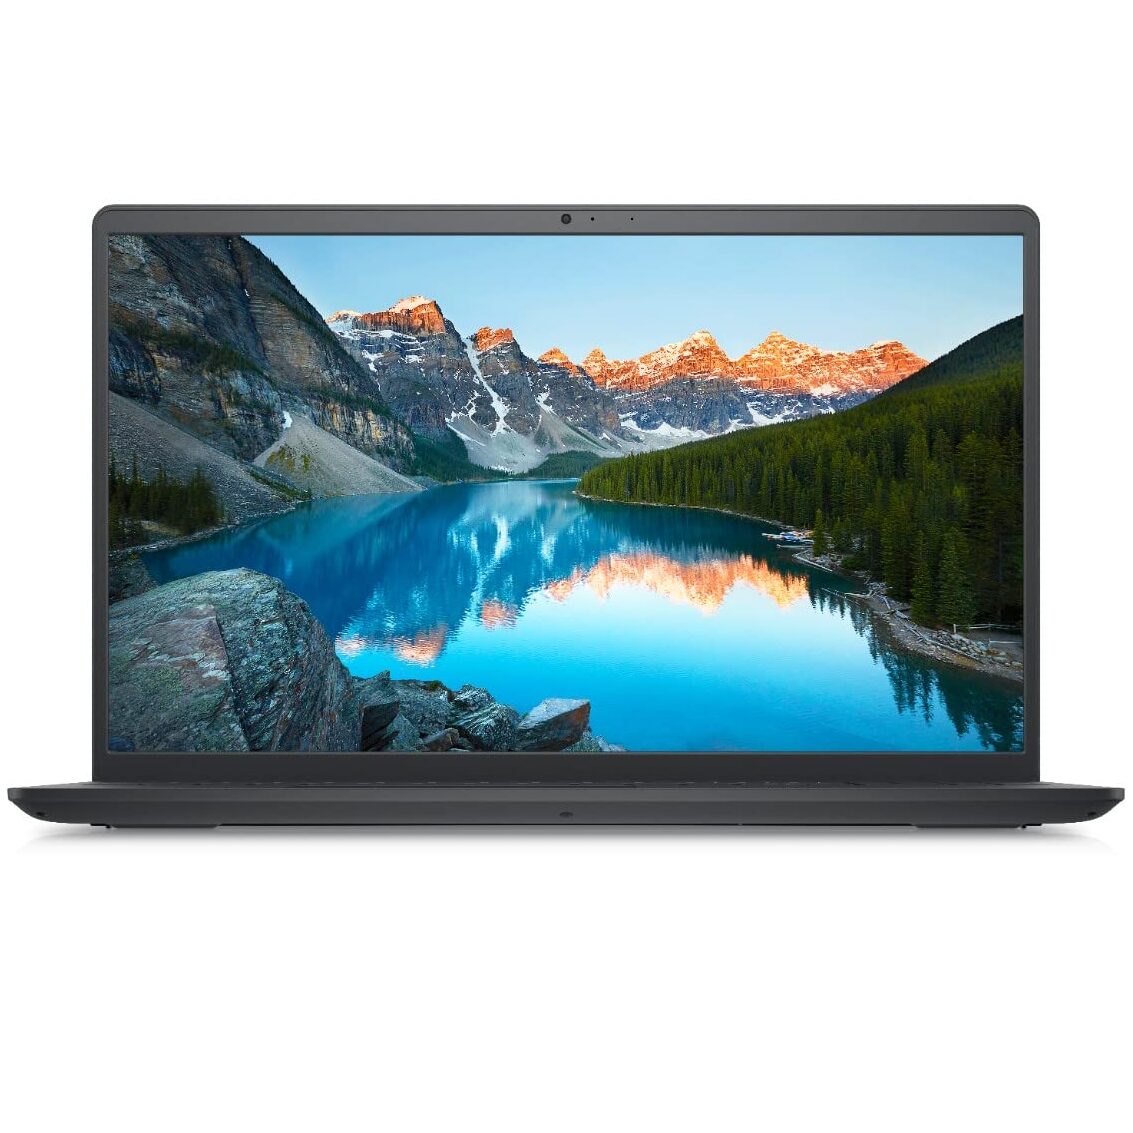 Dell Inspiron 3511 Laptop, Intel I3-1005G1